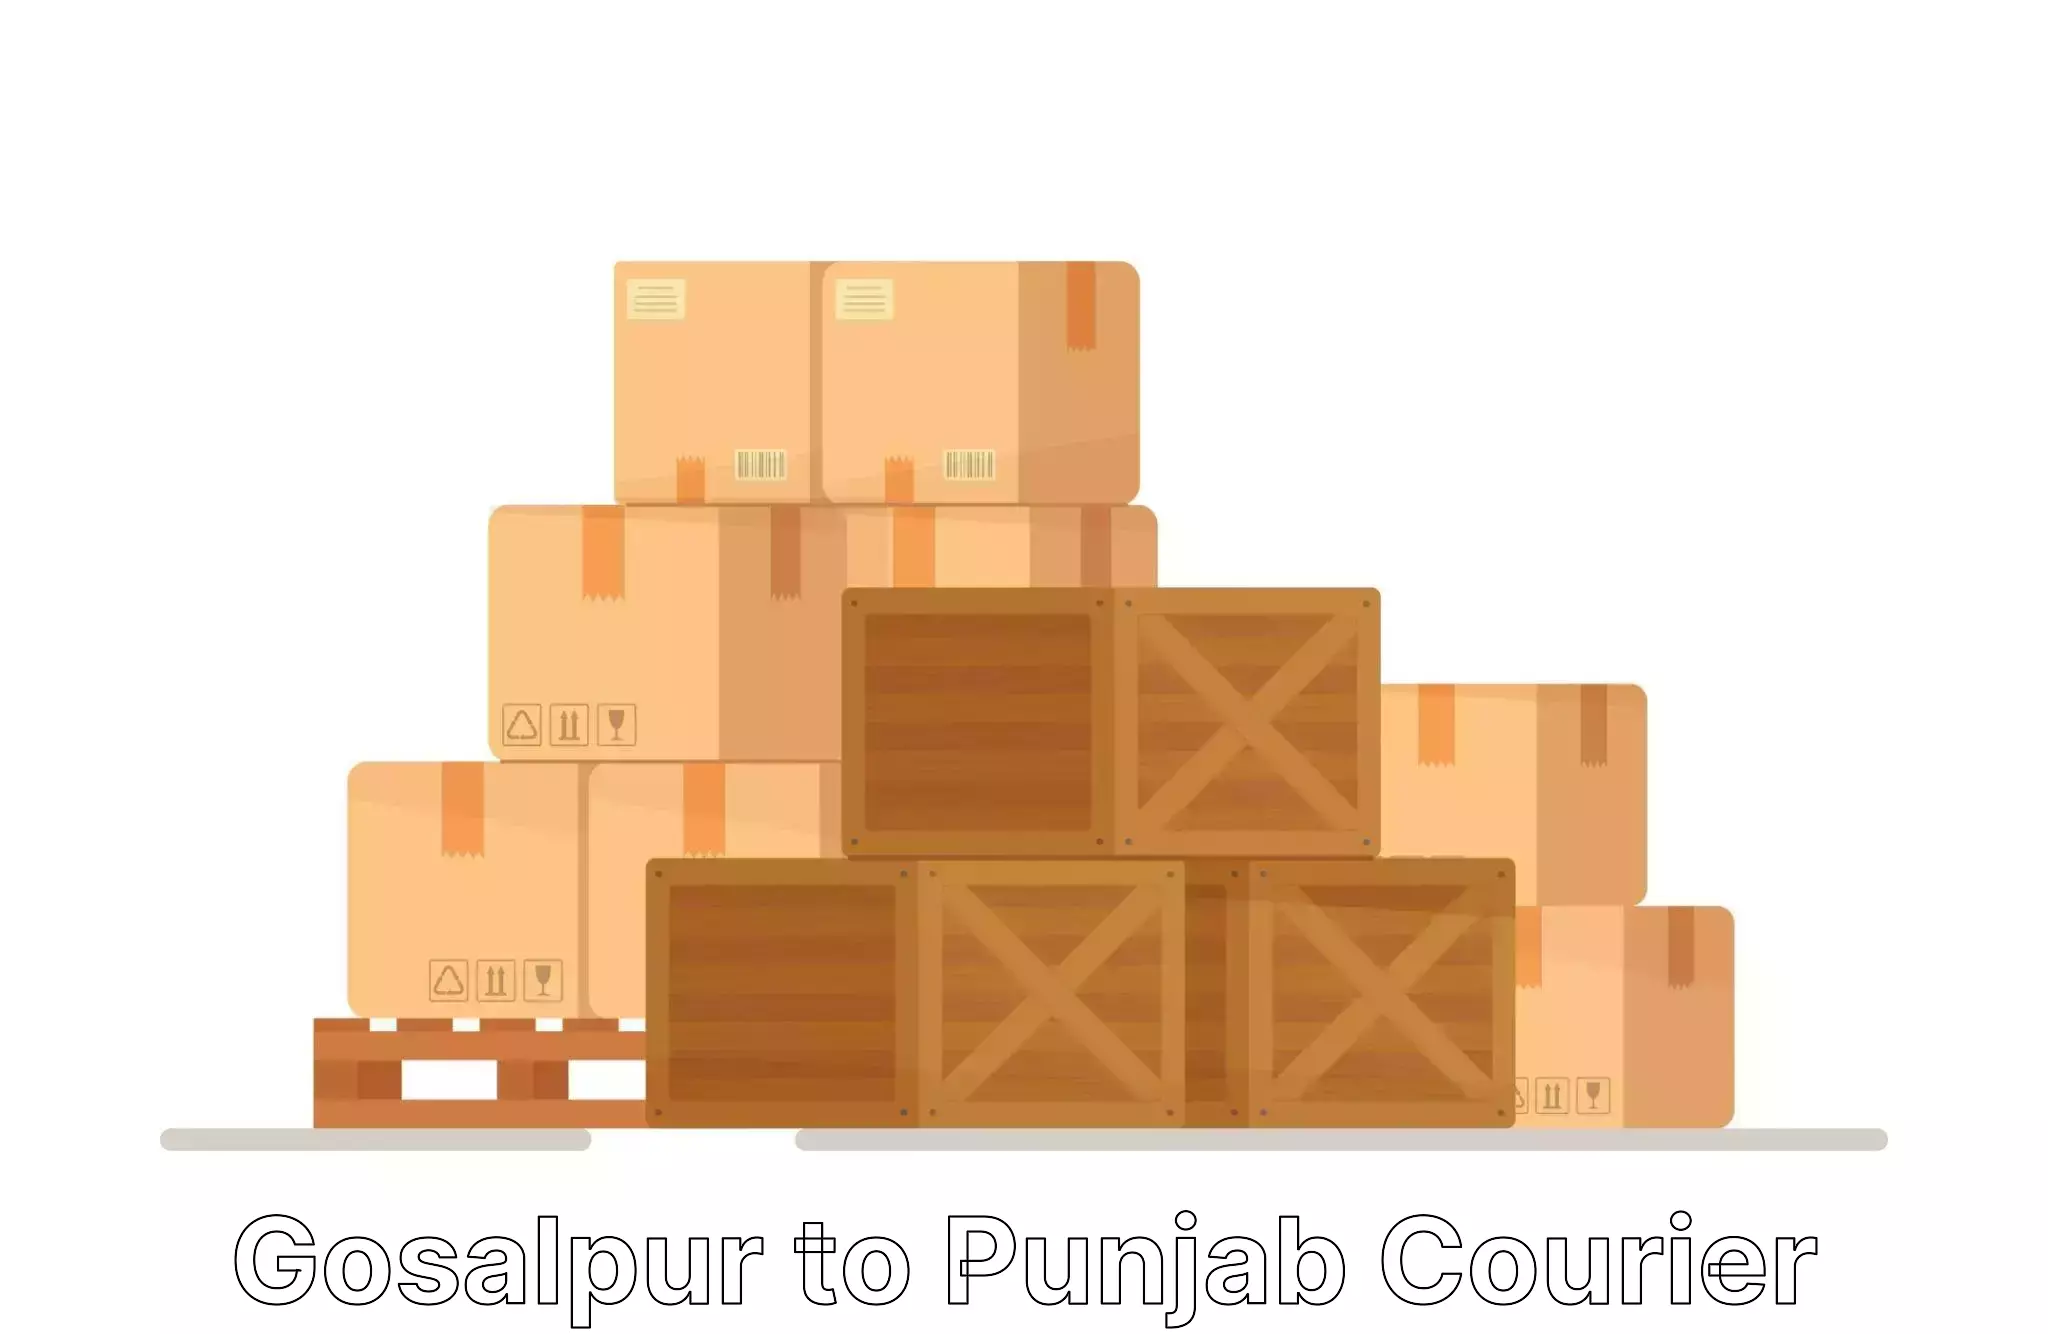 Home goods moving company Gosalpur to Dhuri